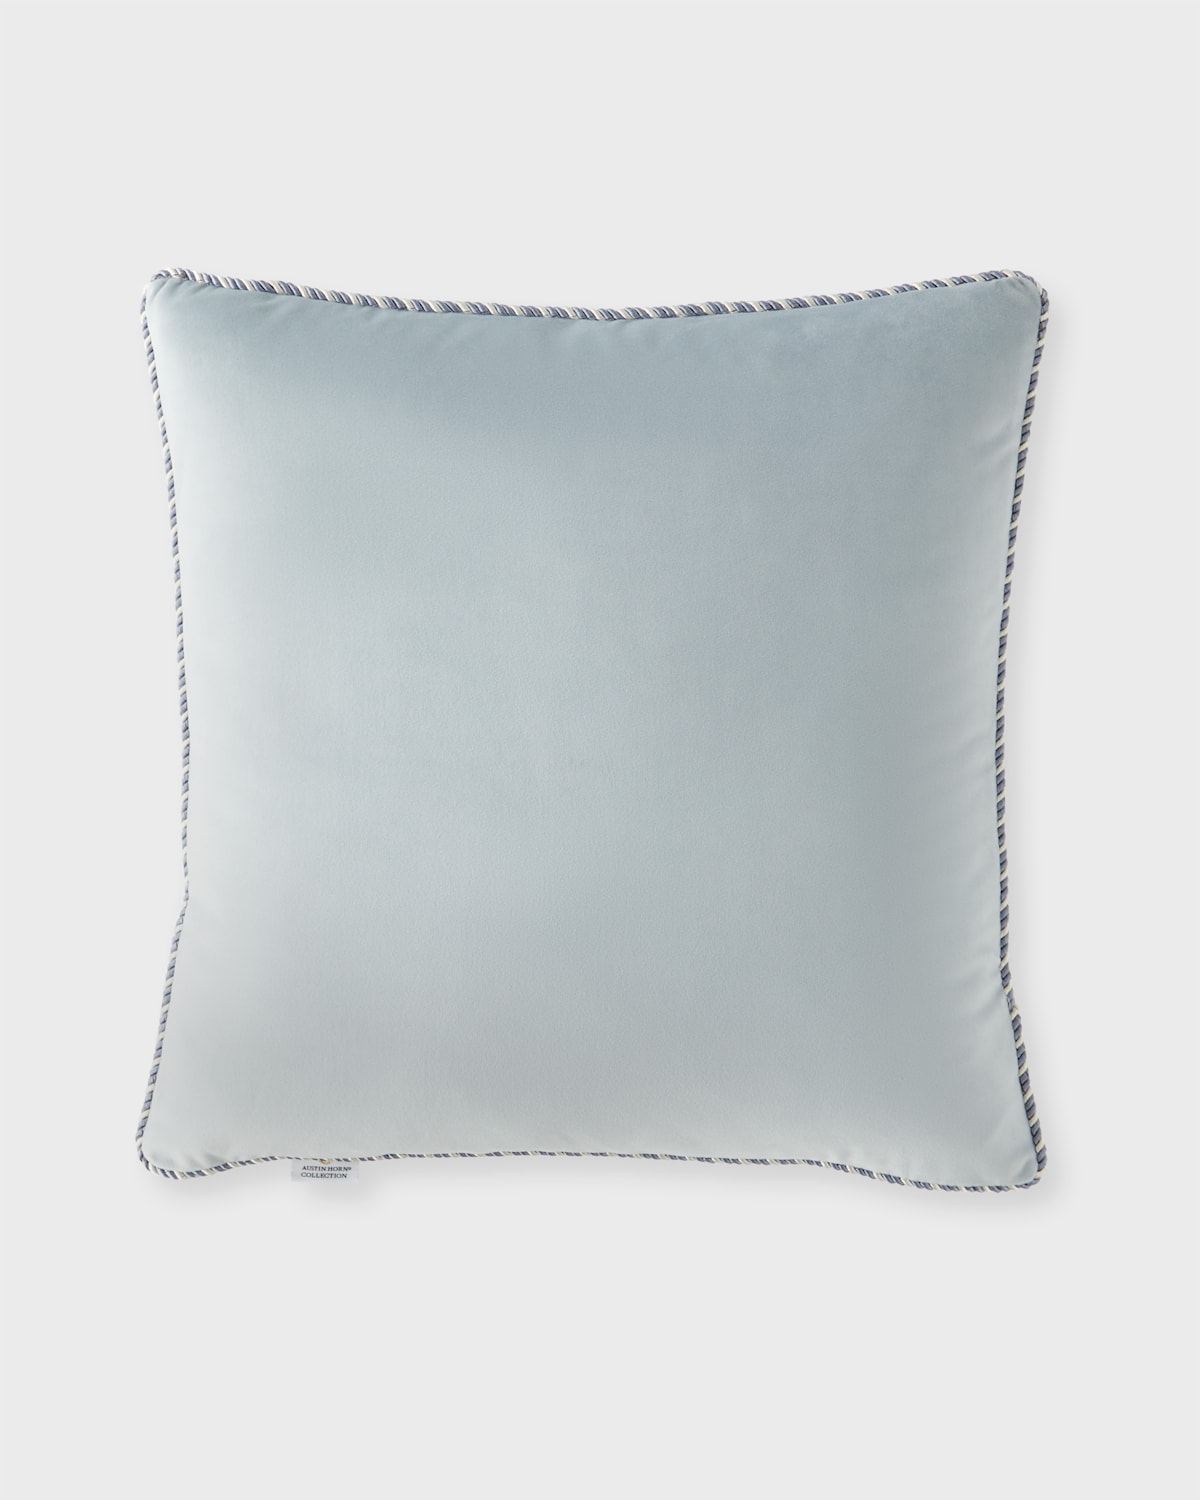 Austin Horn Collection Luna Velvet Pillow, 20"sq. In Blue